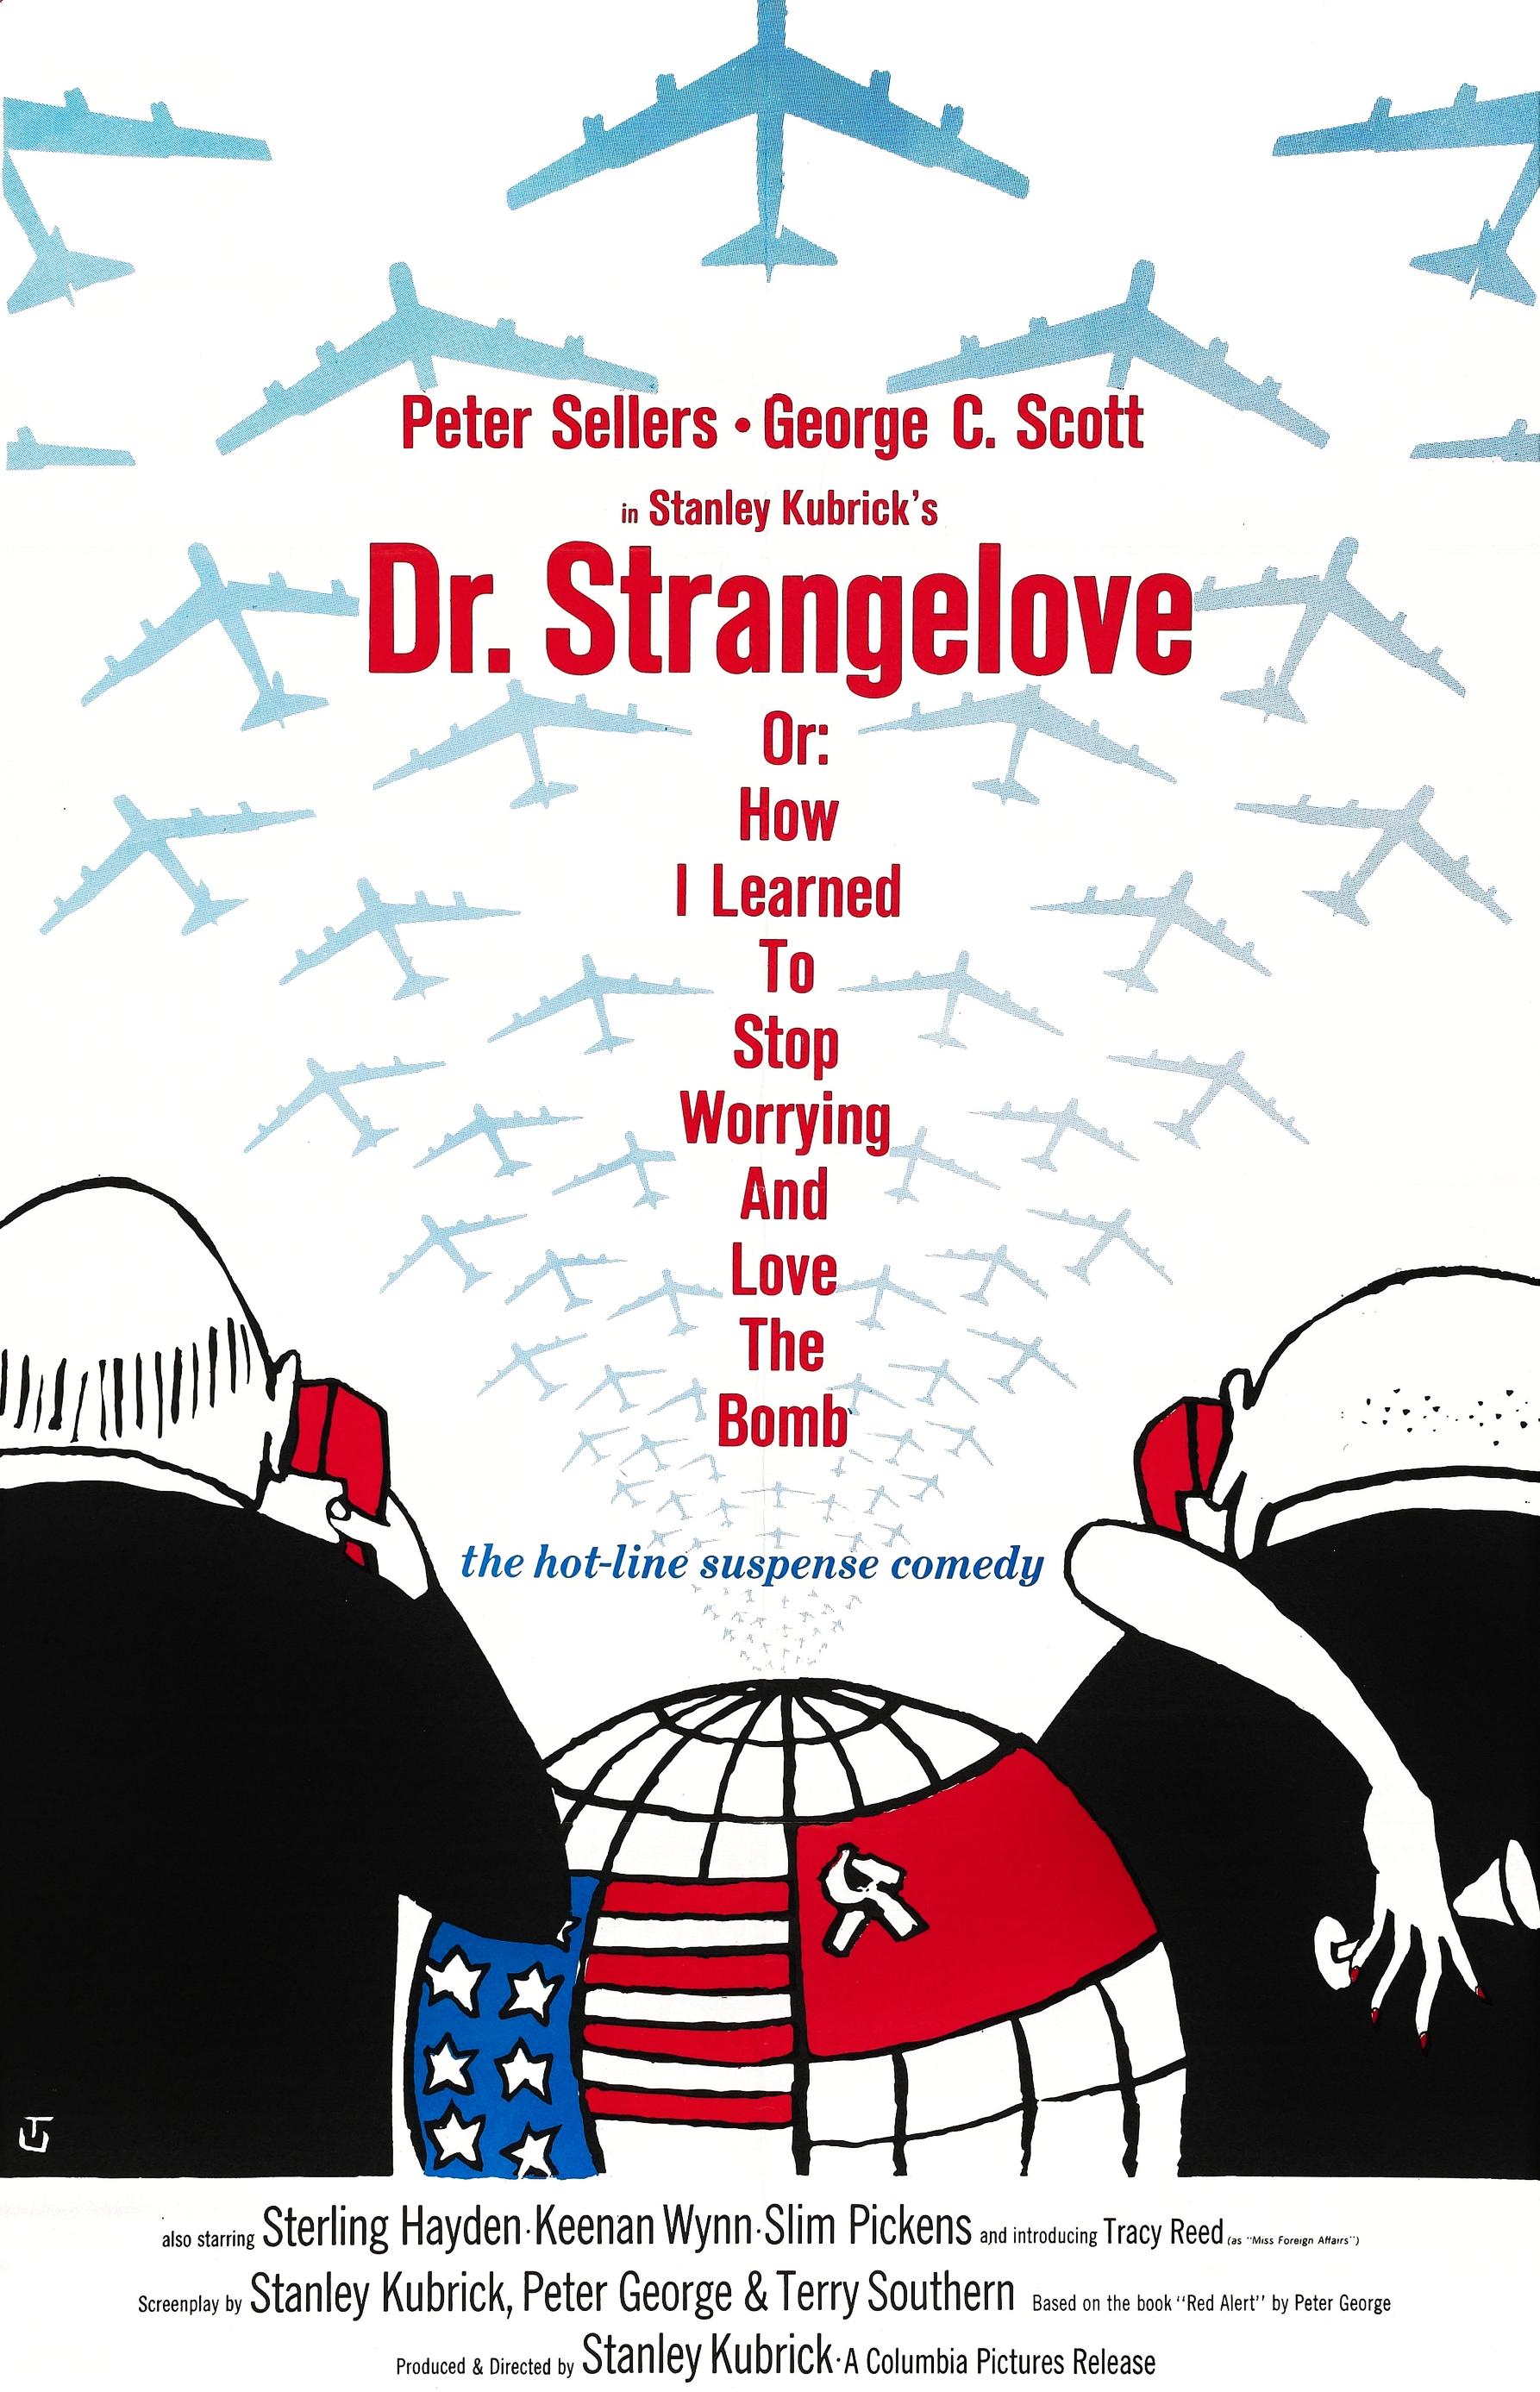 Poster from Dr. Strangelove